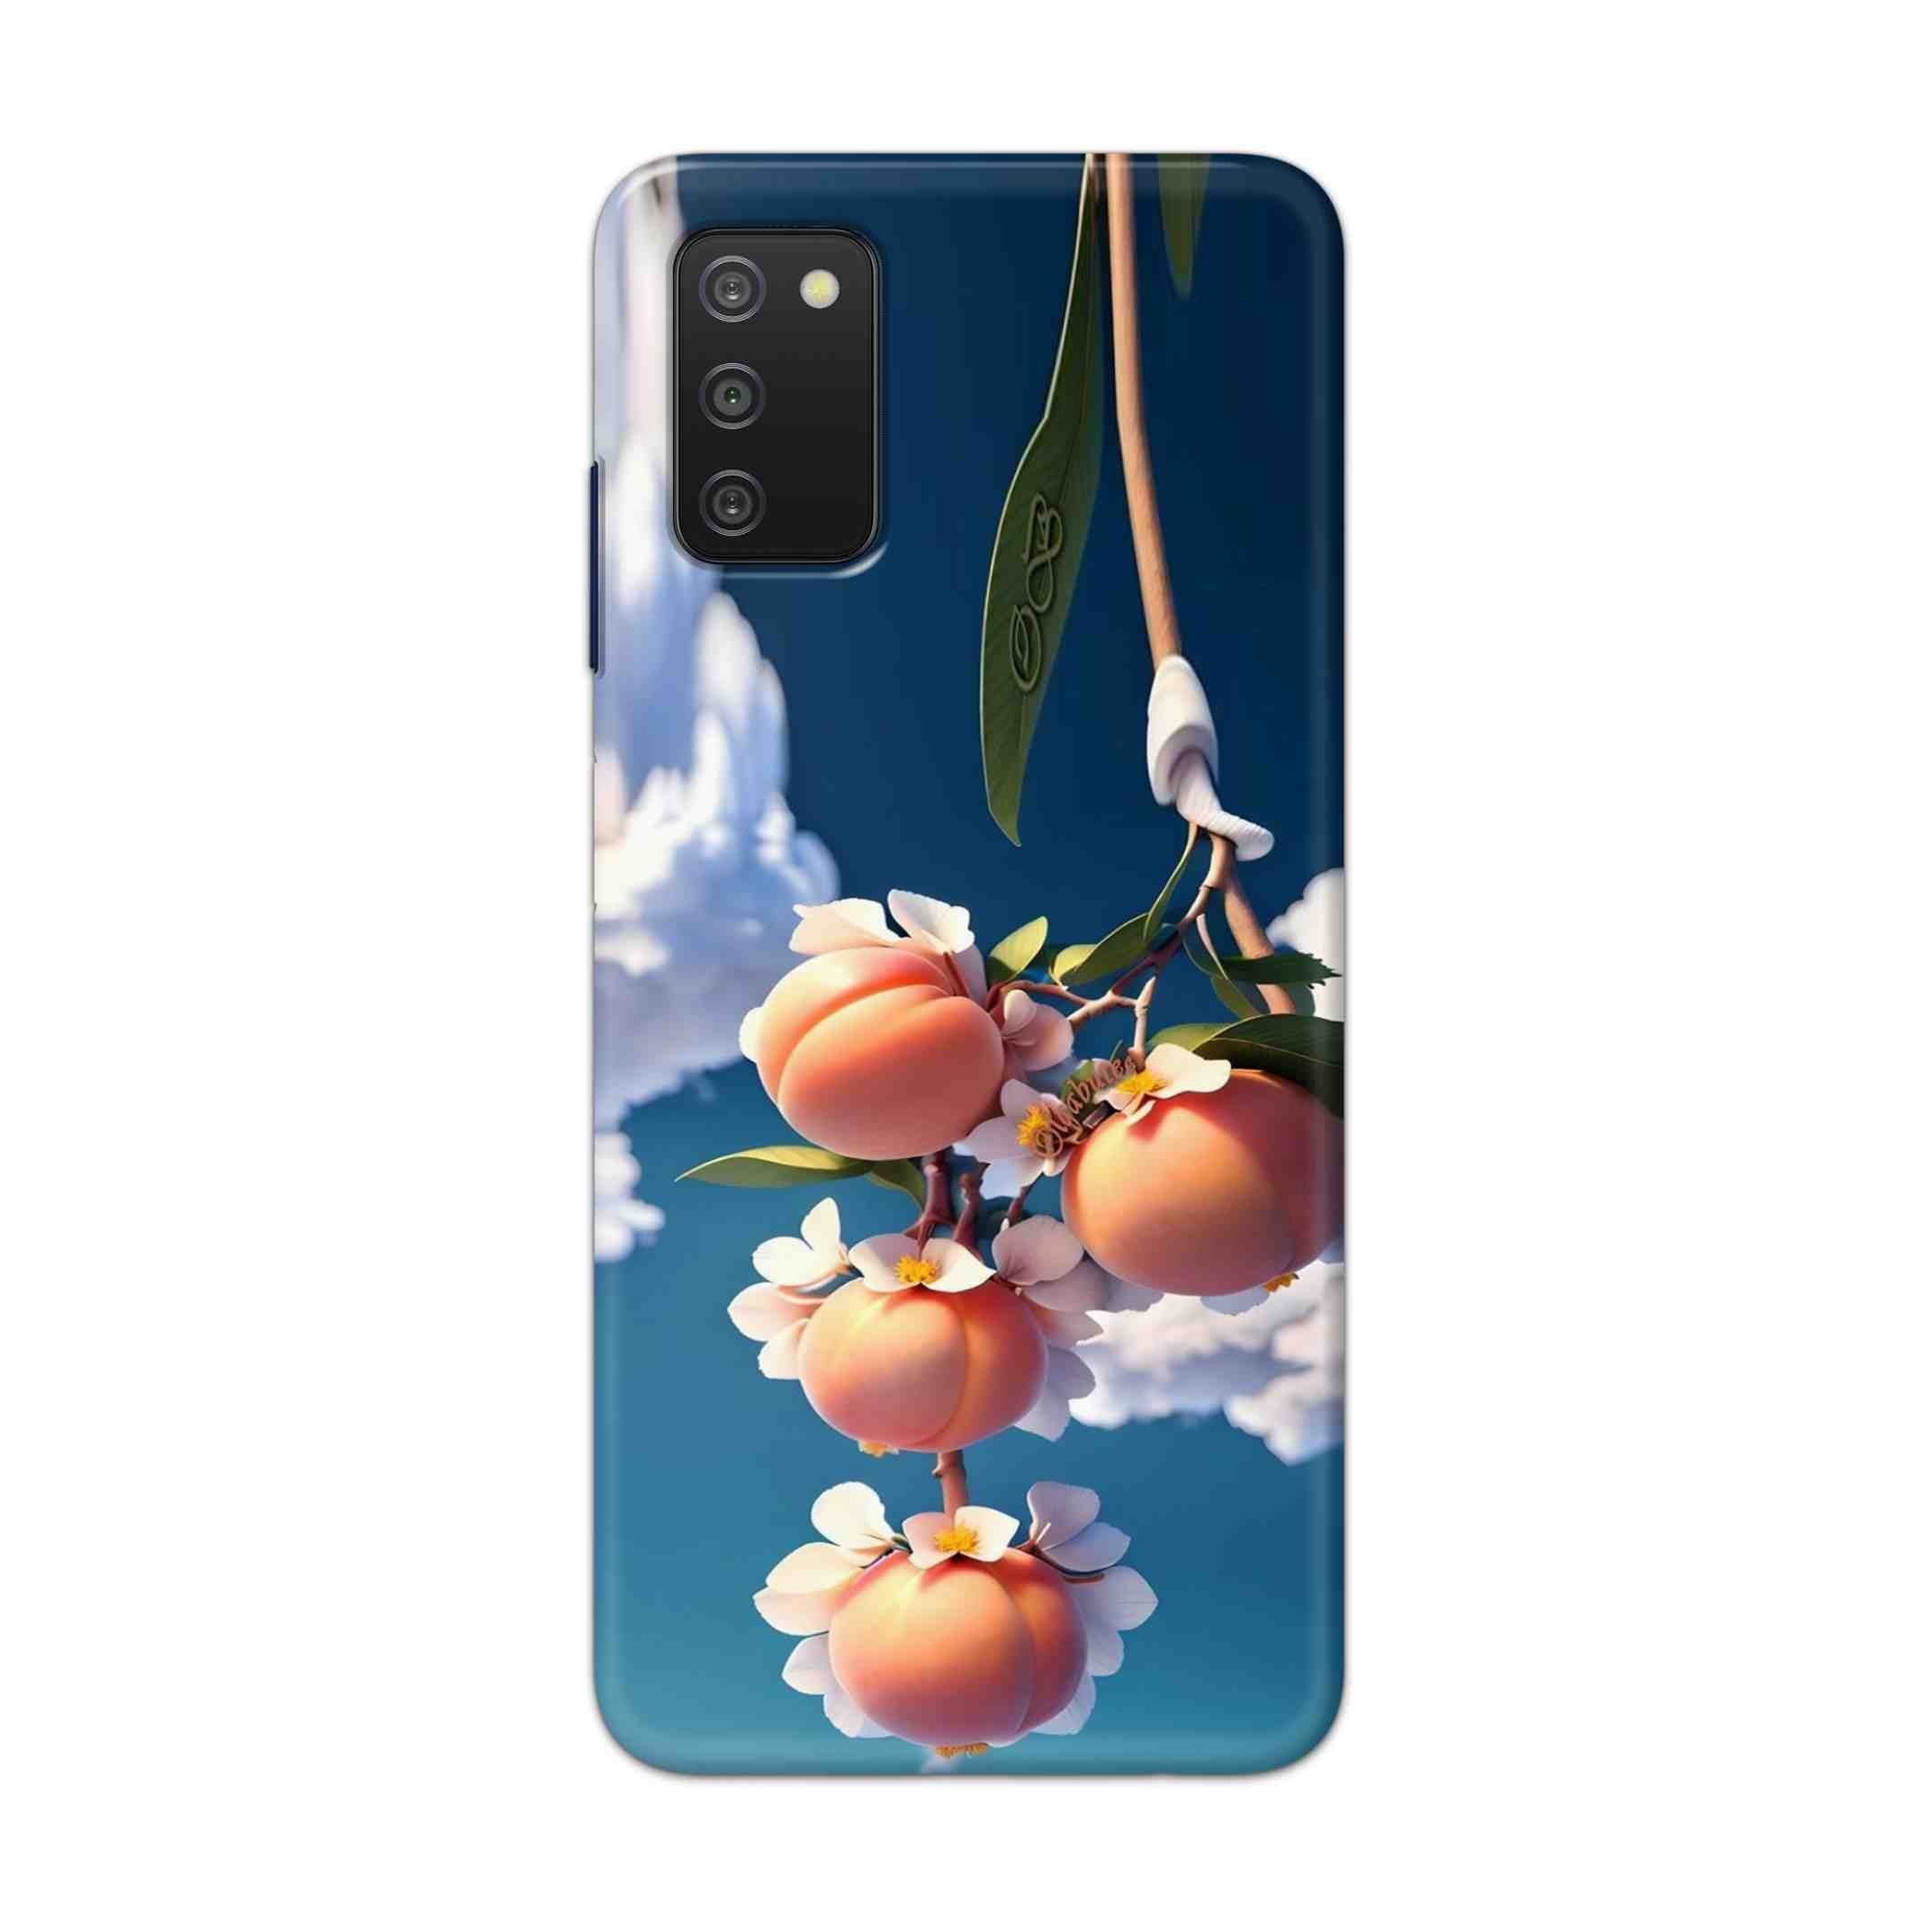 Buy Fruit Hard Back Mobile Phone Case Cover For Samsung A03s Online